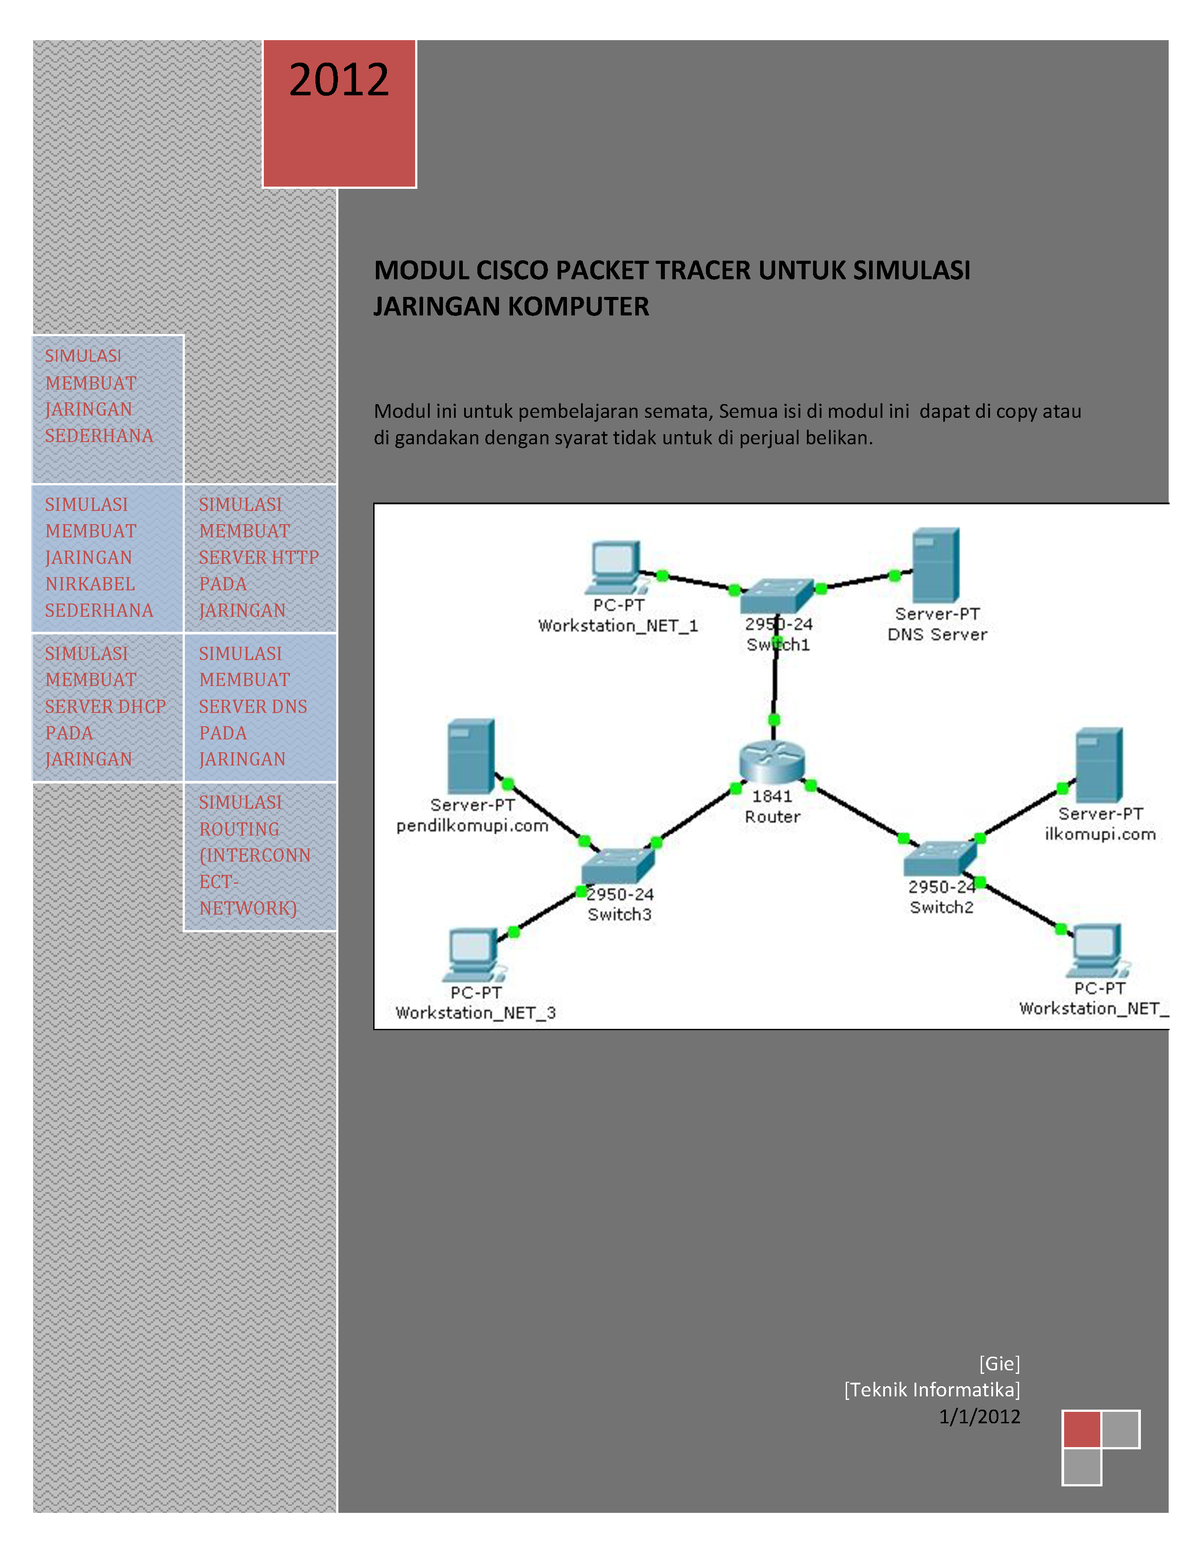 1 Ebook Belajar Packet Tracer Modul Cisco Packet Tracer Untuk